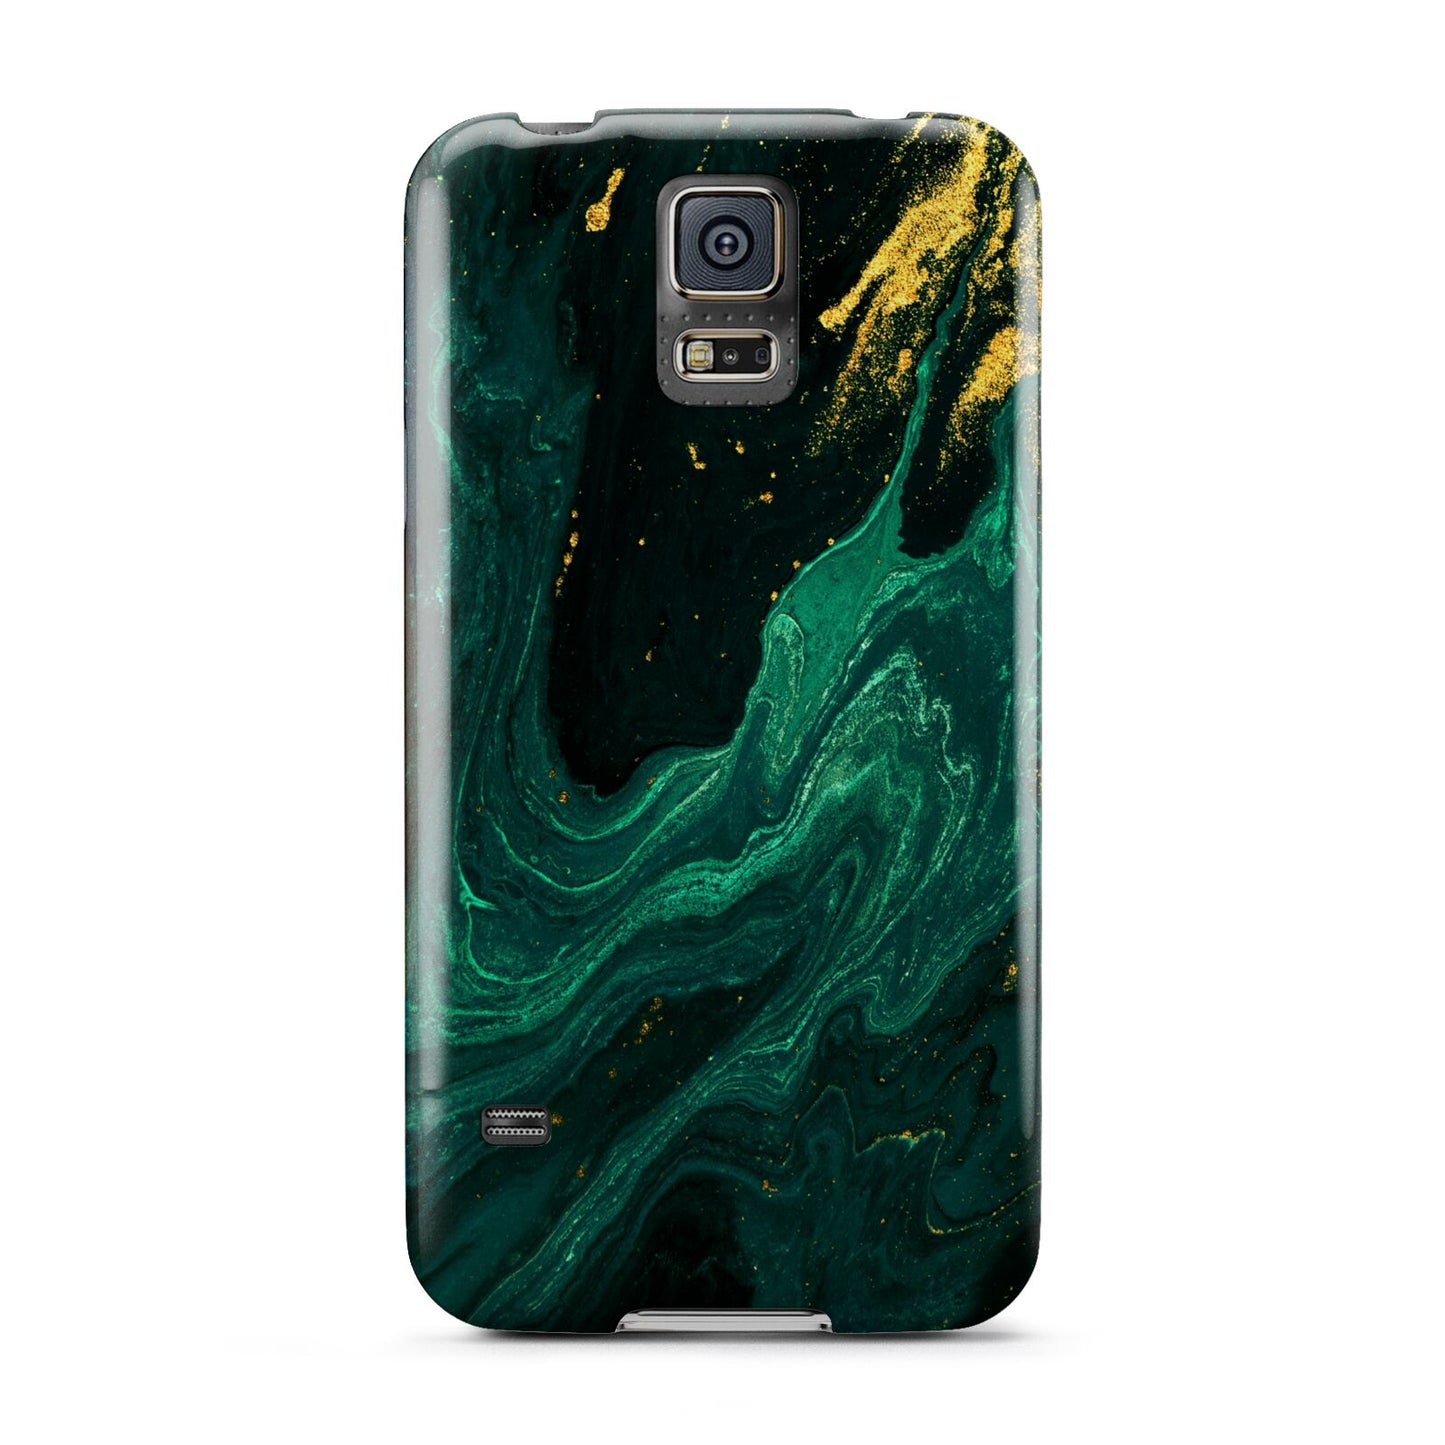 Emerald Green Samsung Galaxy S5 Case